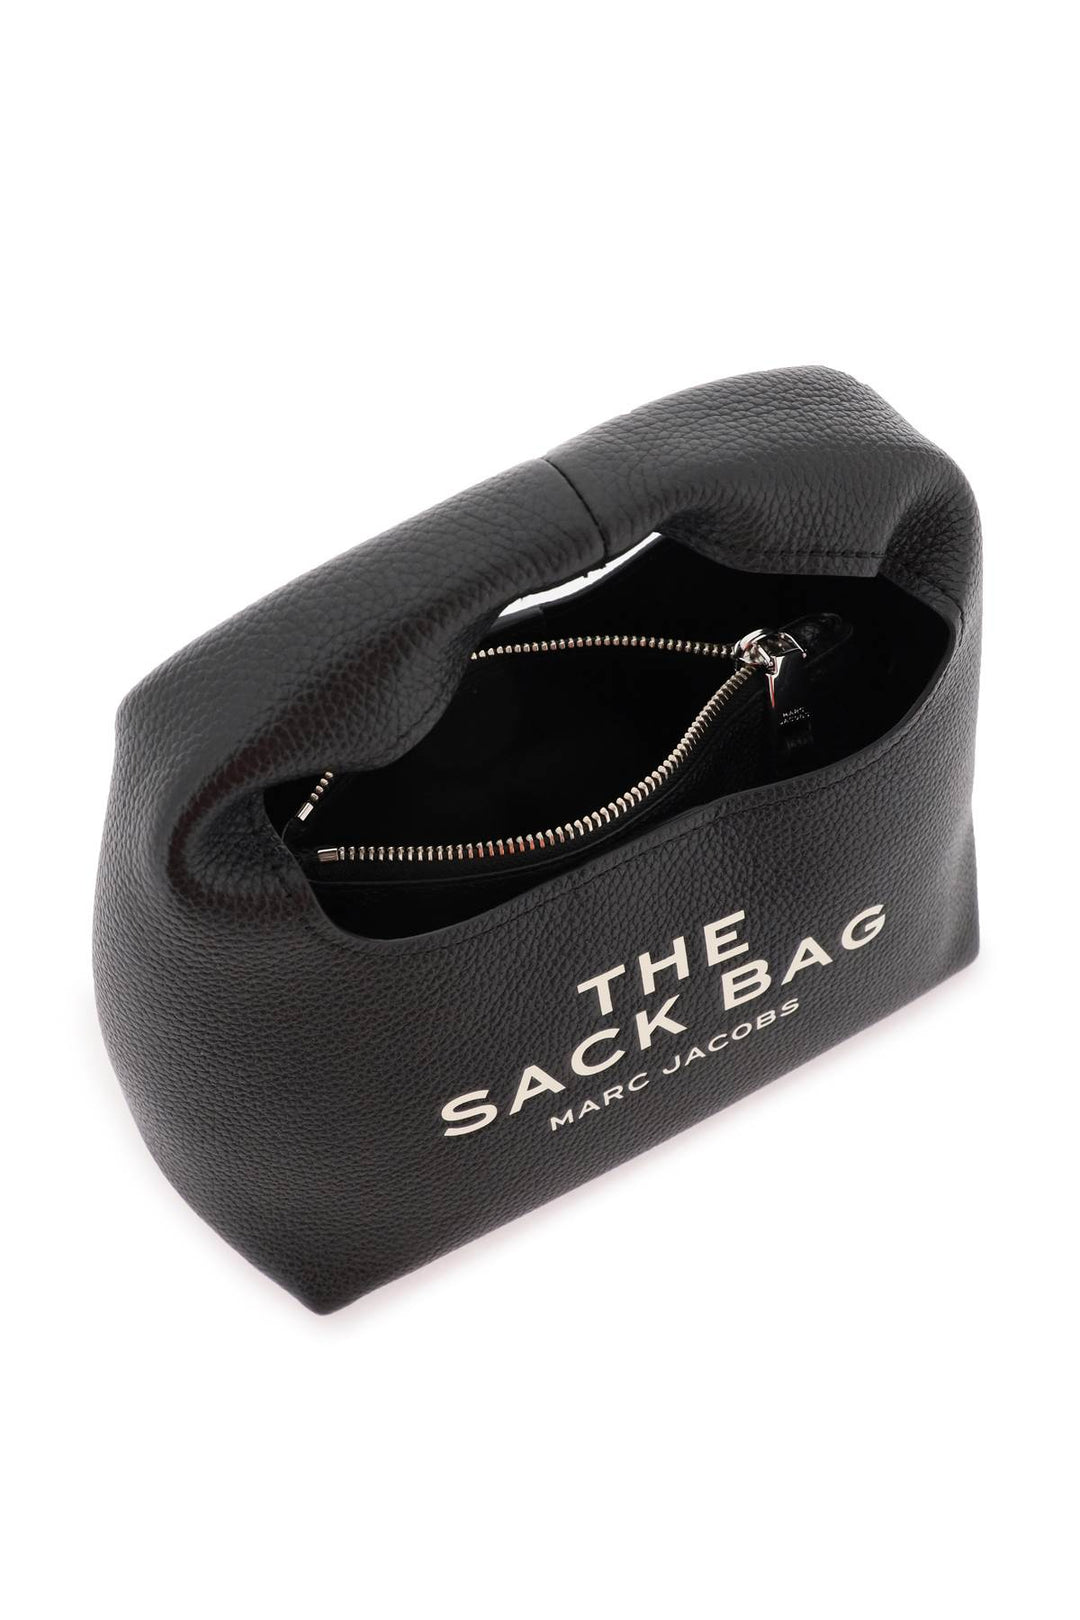 Borsa A Mano The Mini Sack Bag - Marc Jacobs - Donna